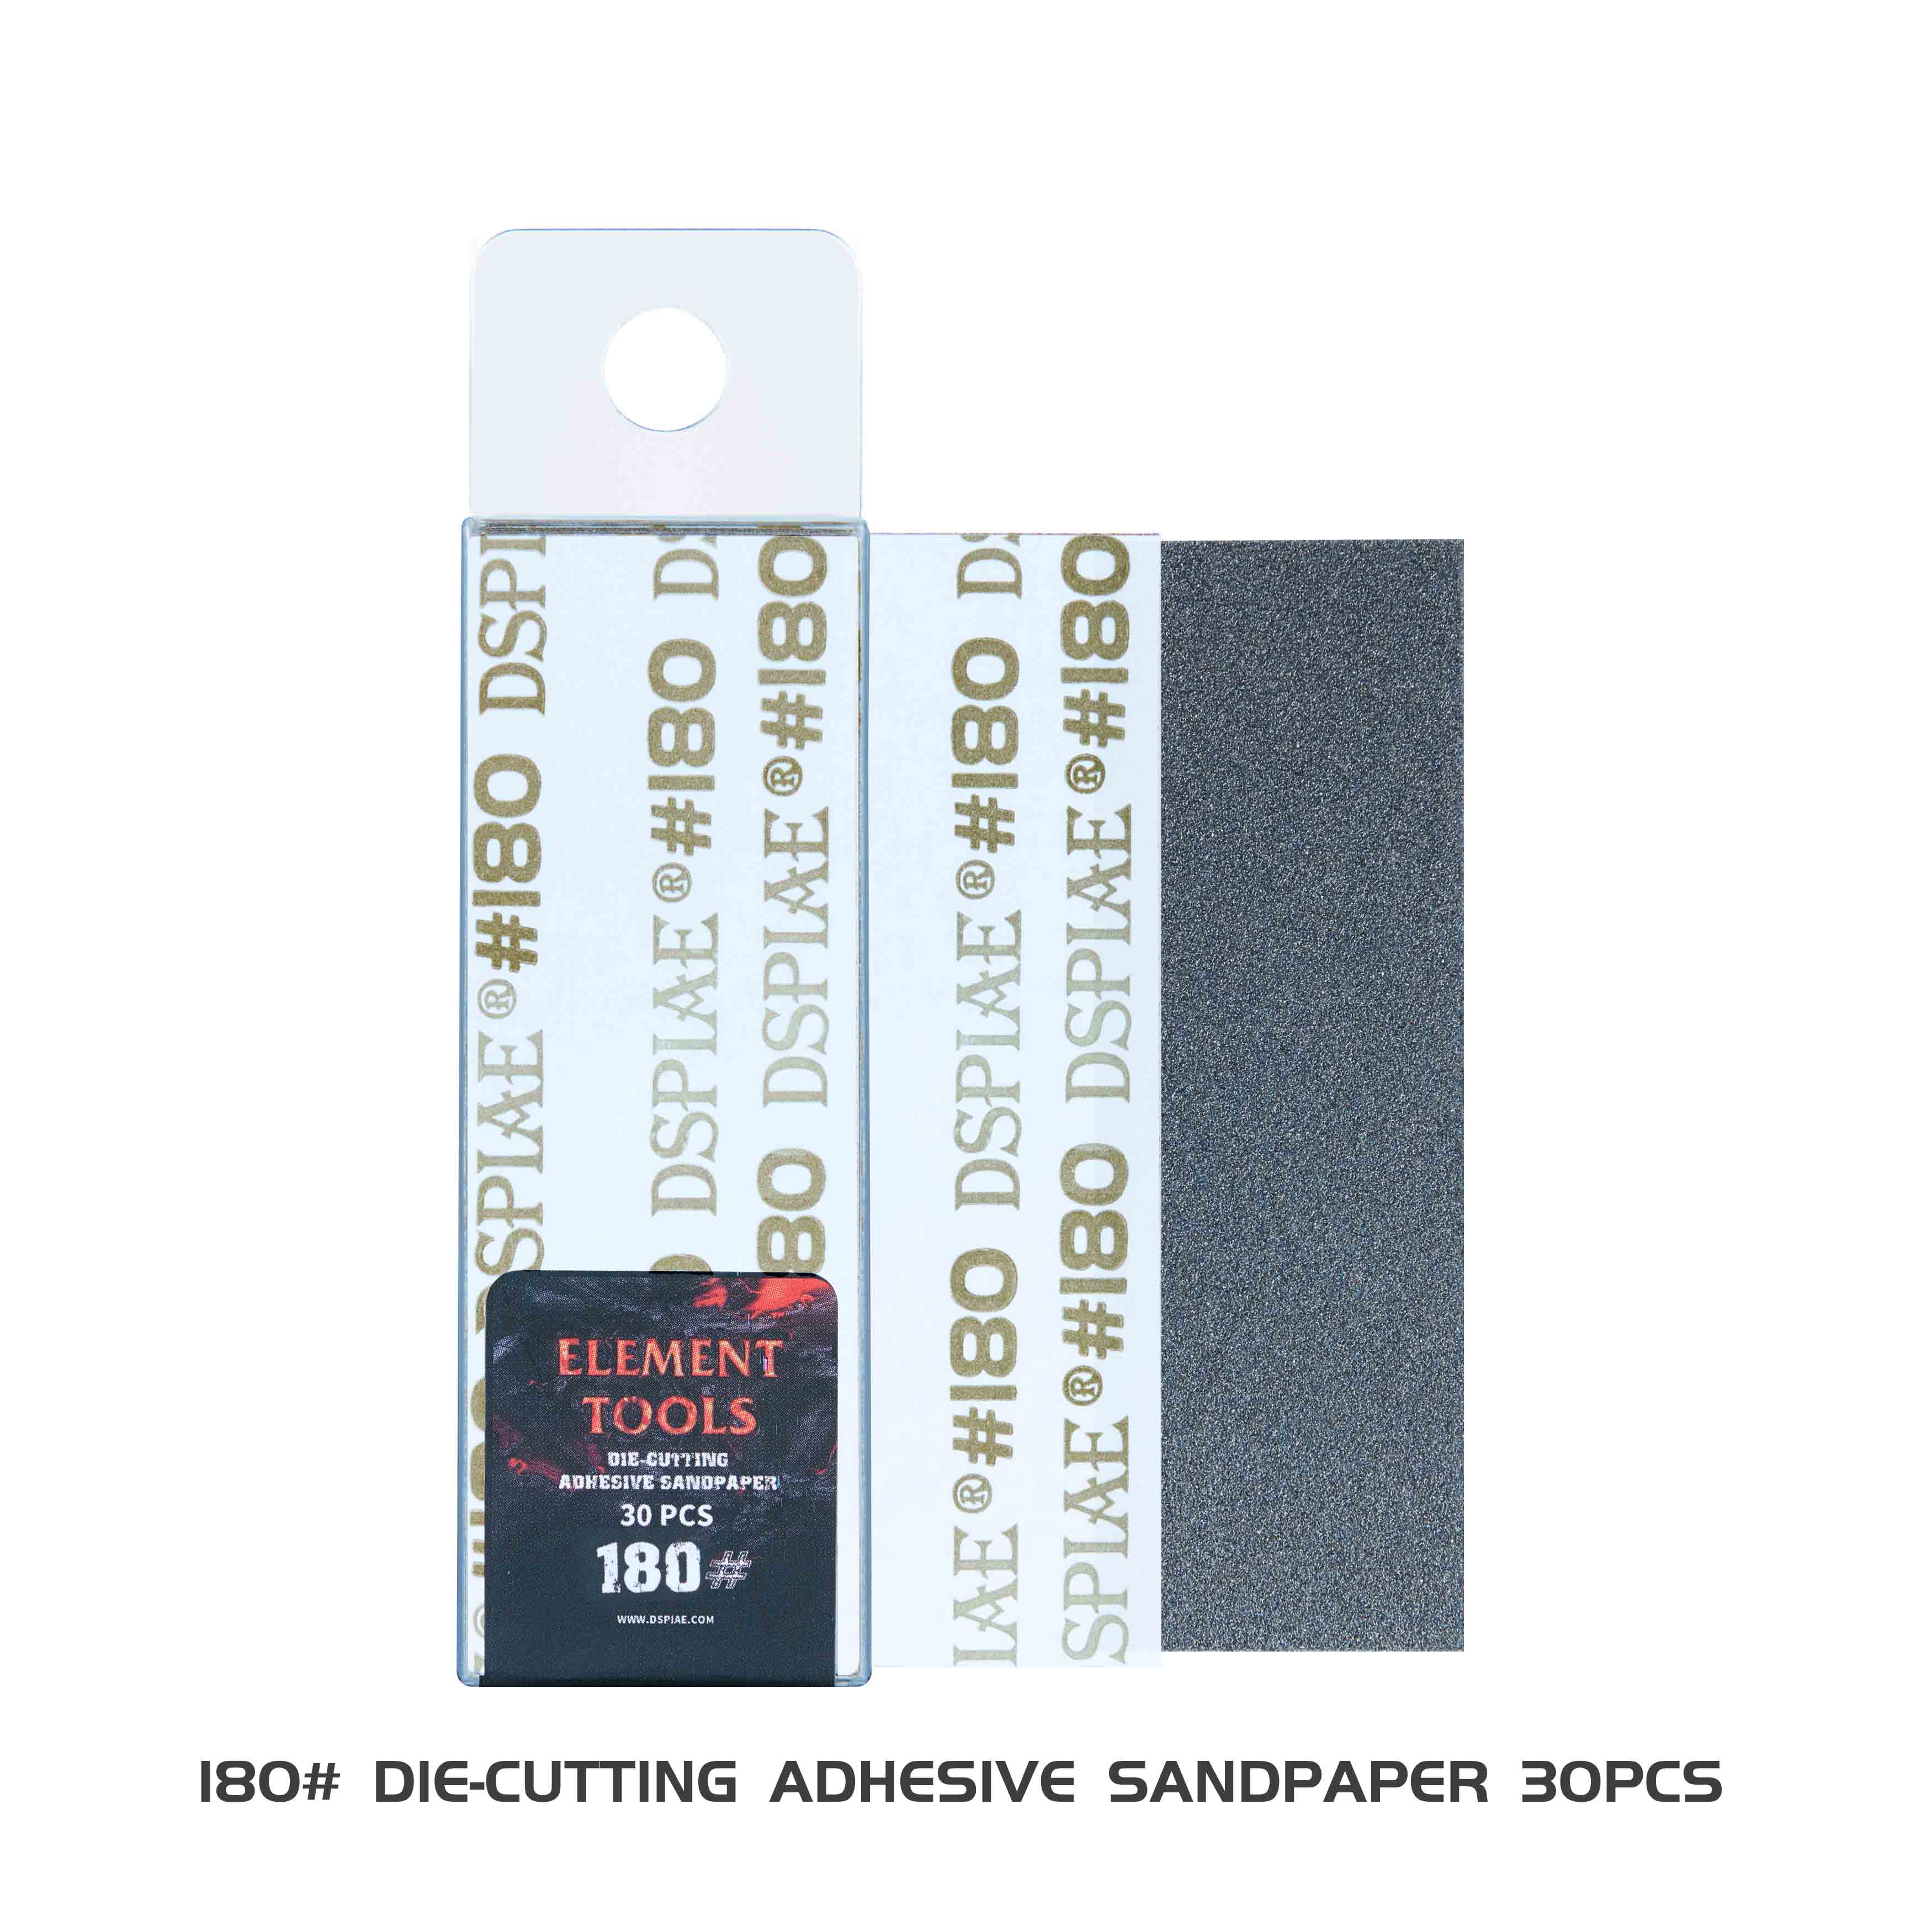 DSPIAE - Die-Cutting Adhesive Sandpaper